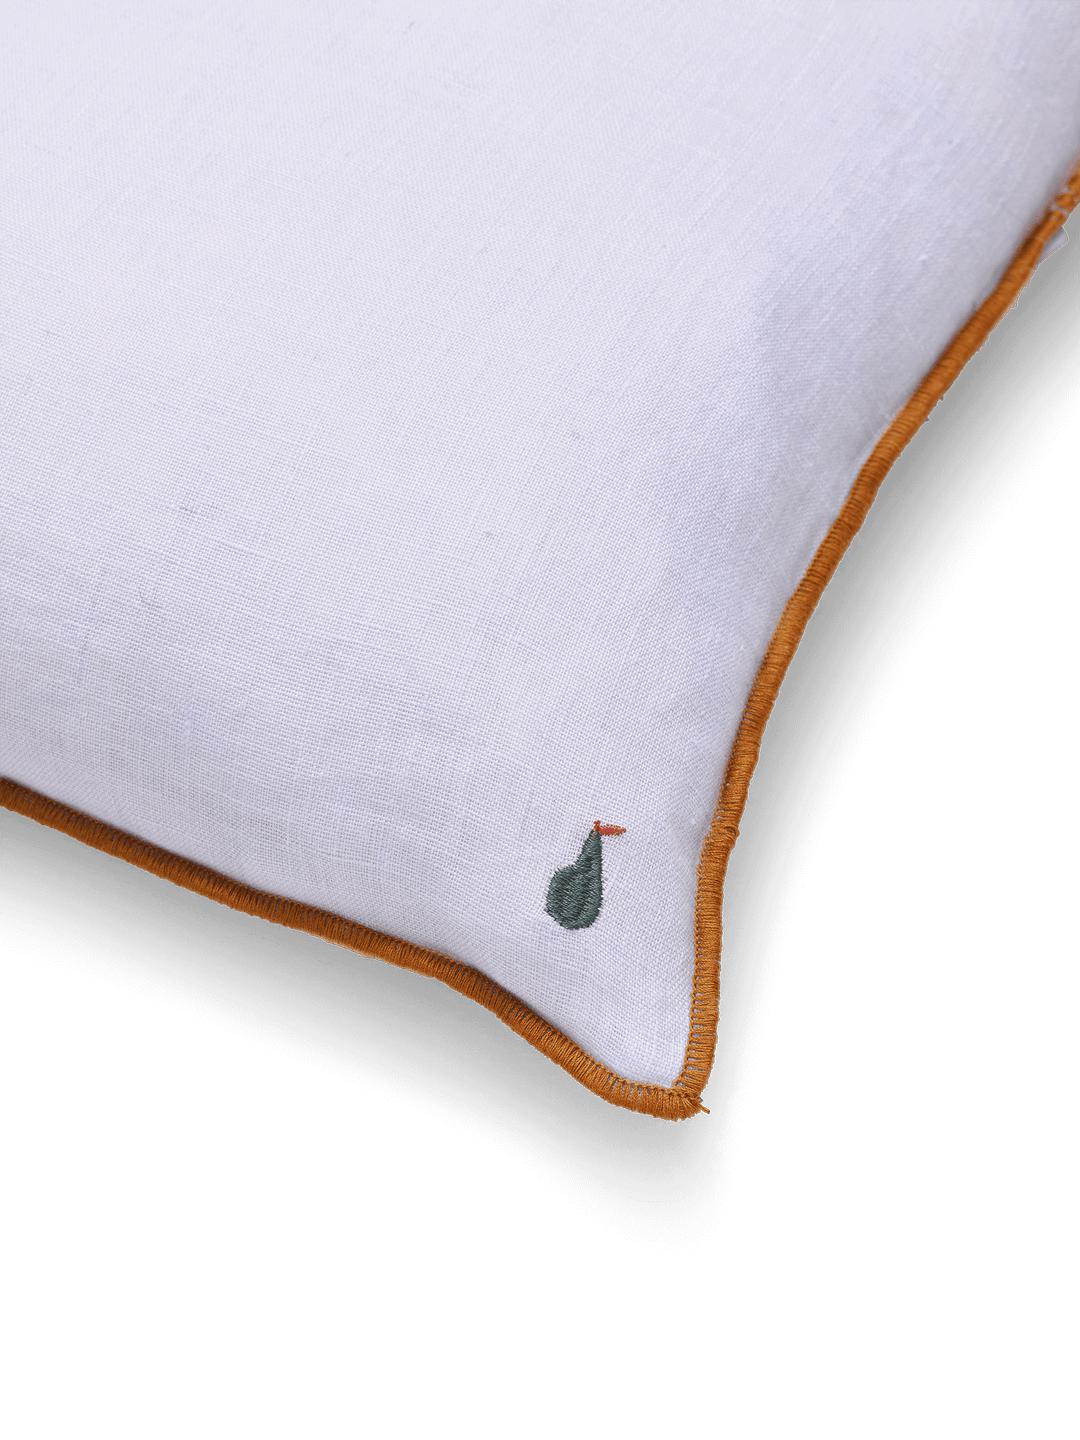 Ferm Living Contrast Linen Cushion, Lilac